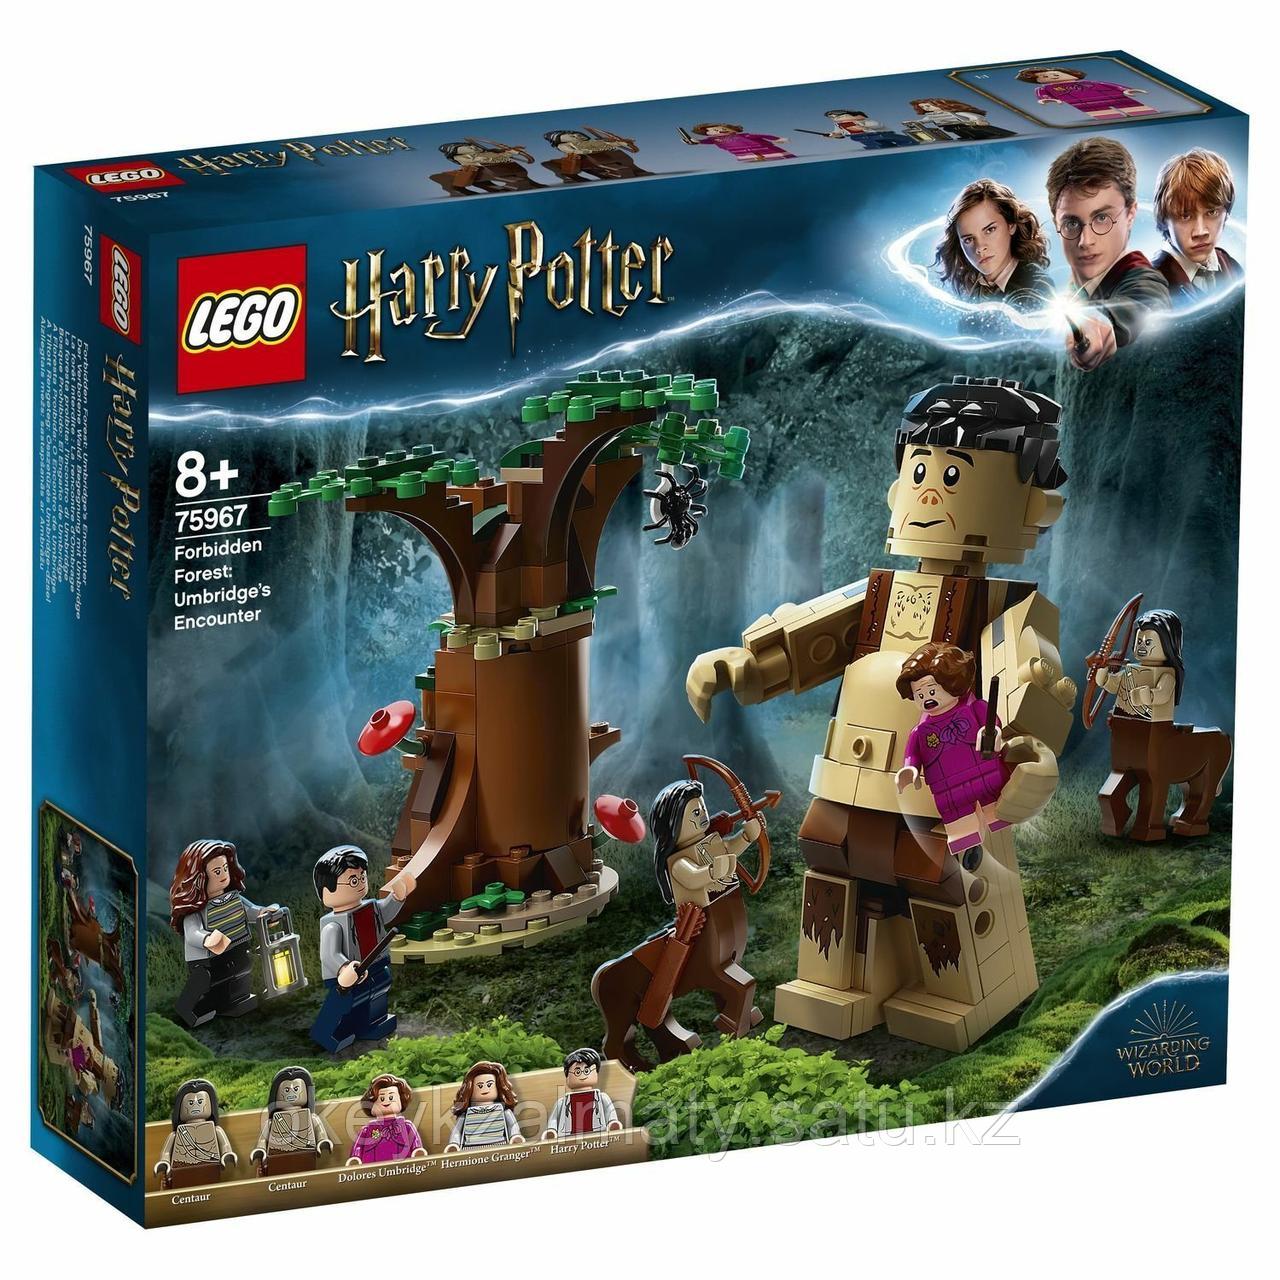 LEGO Harry Potter: Грохх и Долорес Амбридж 75967